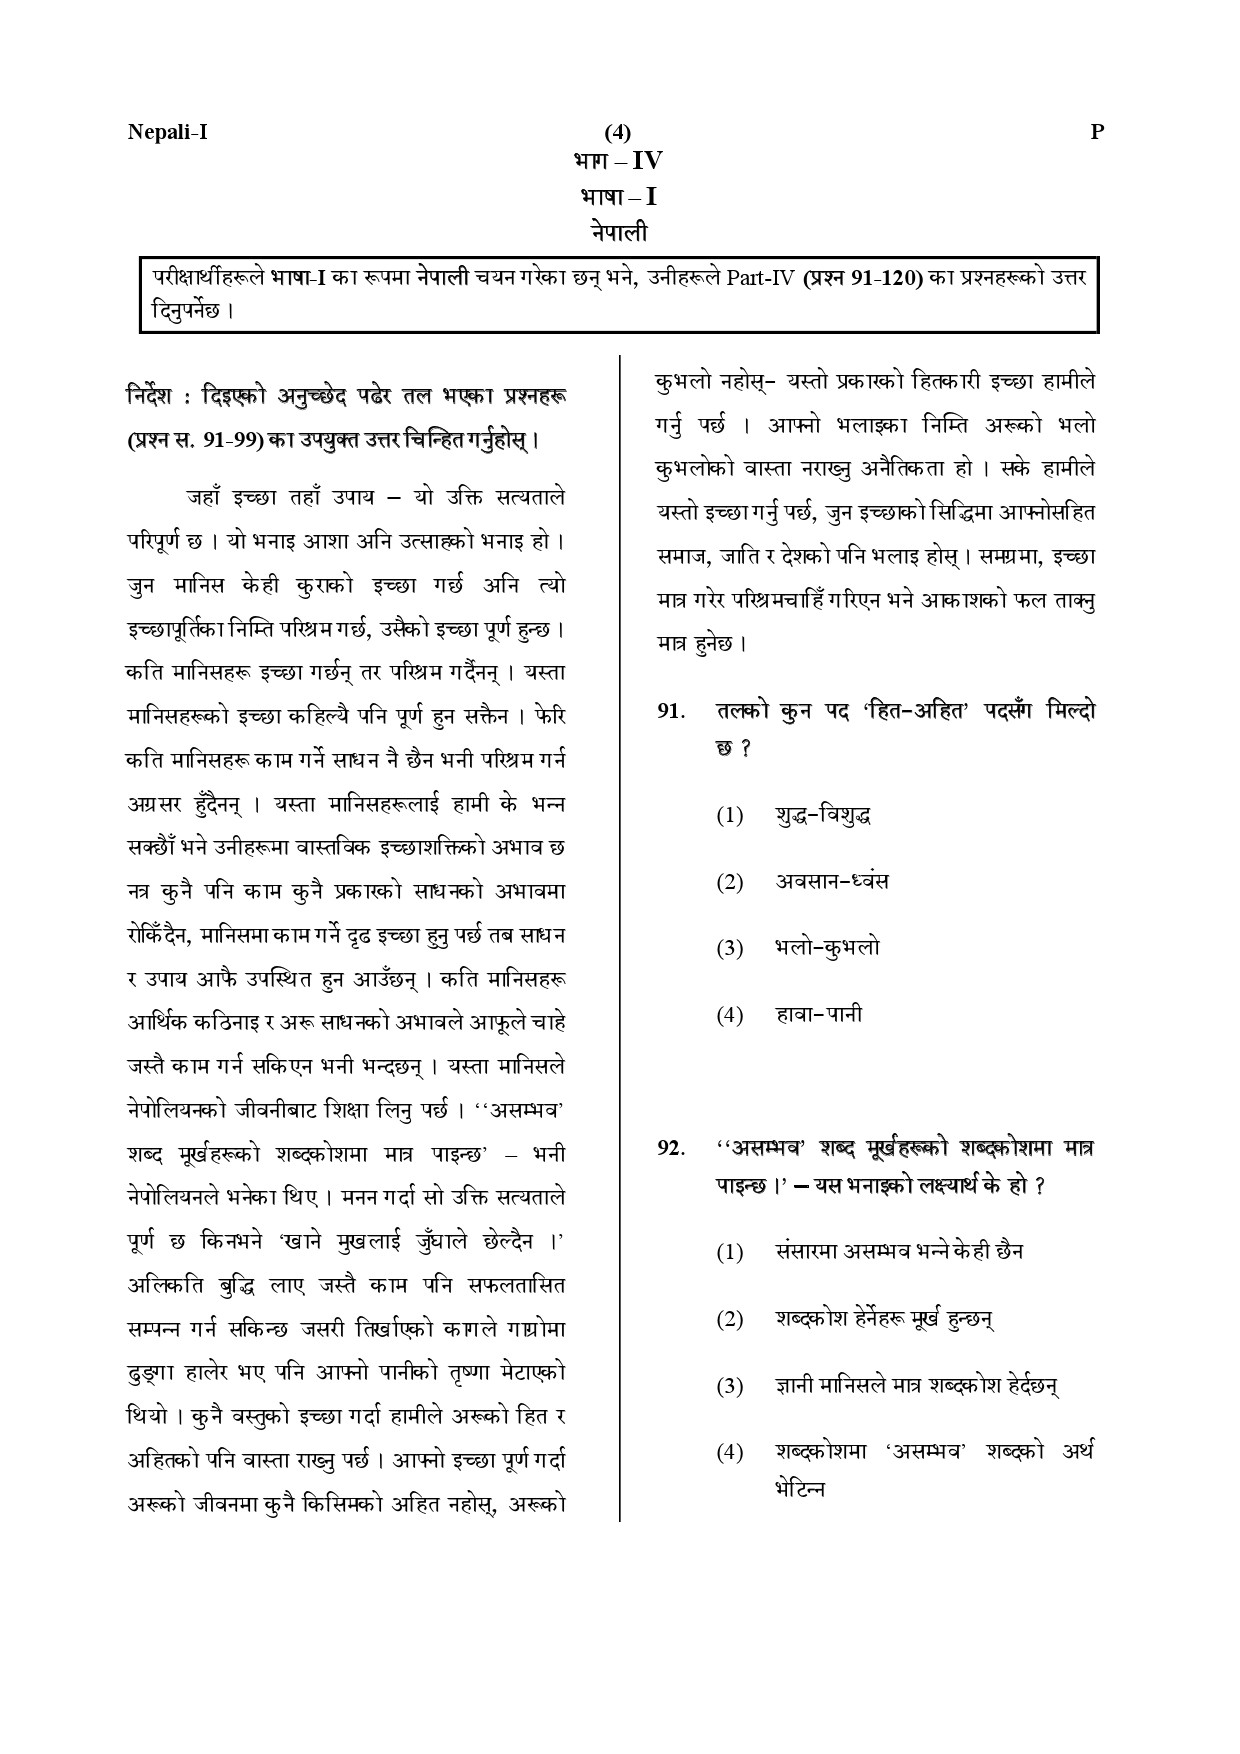 CTET July 2019 Paper 1 Part IV Language 1 Nepali 1